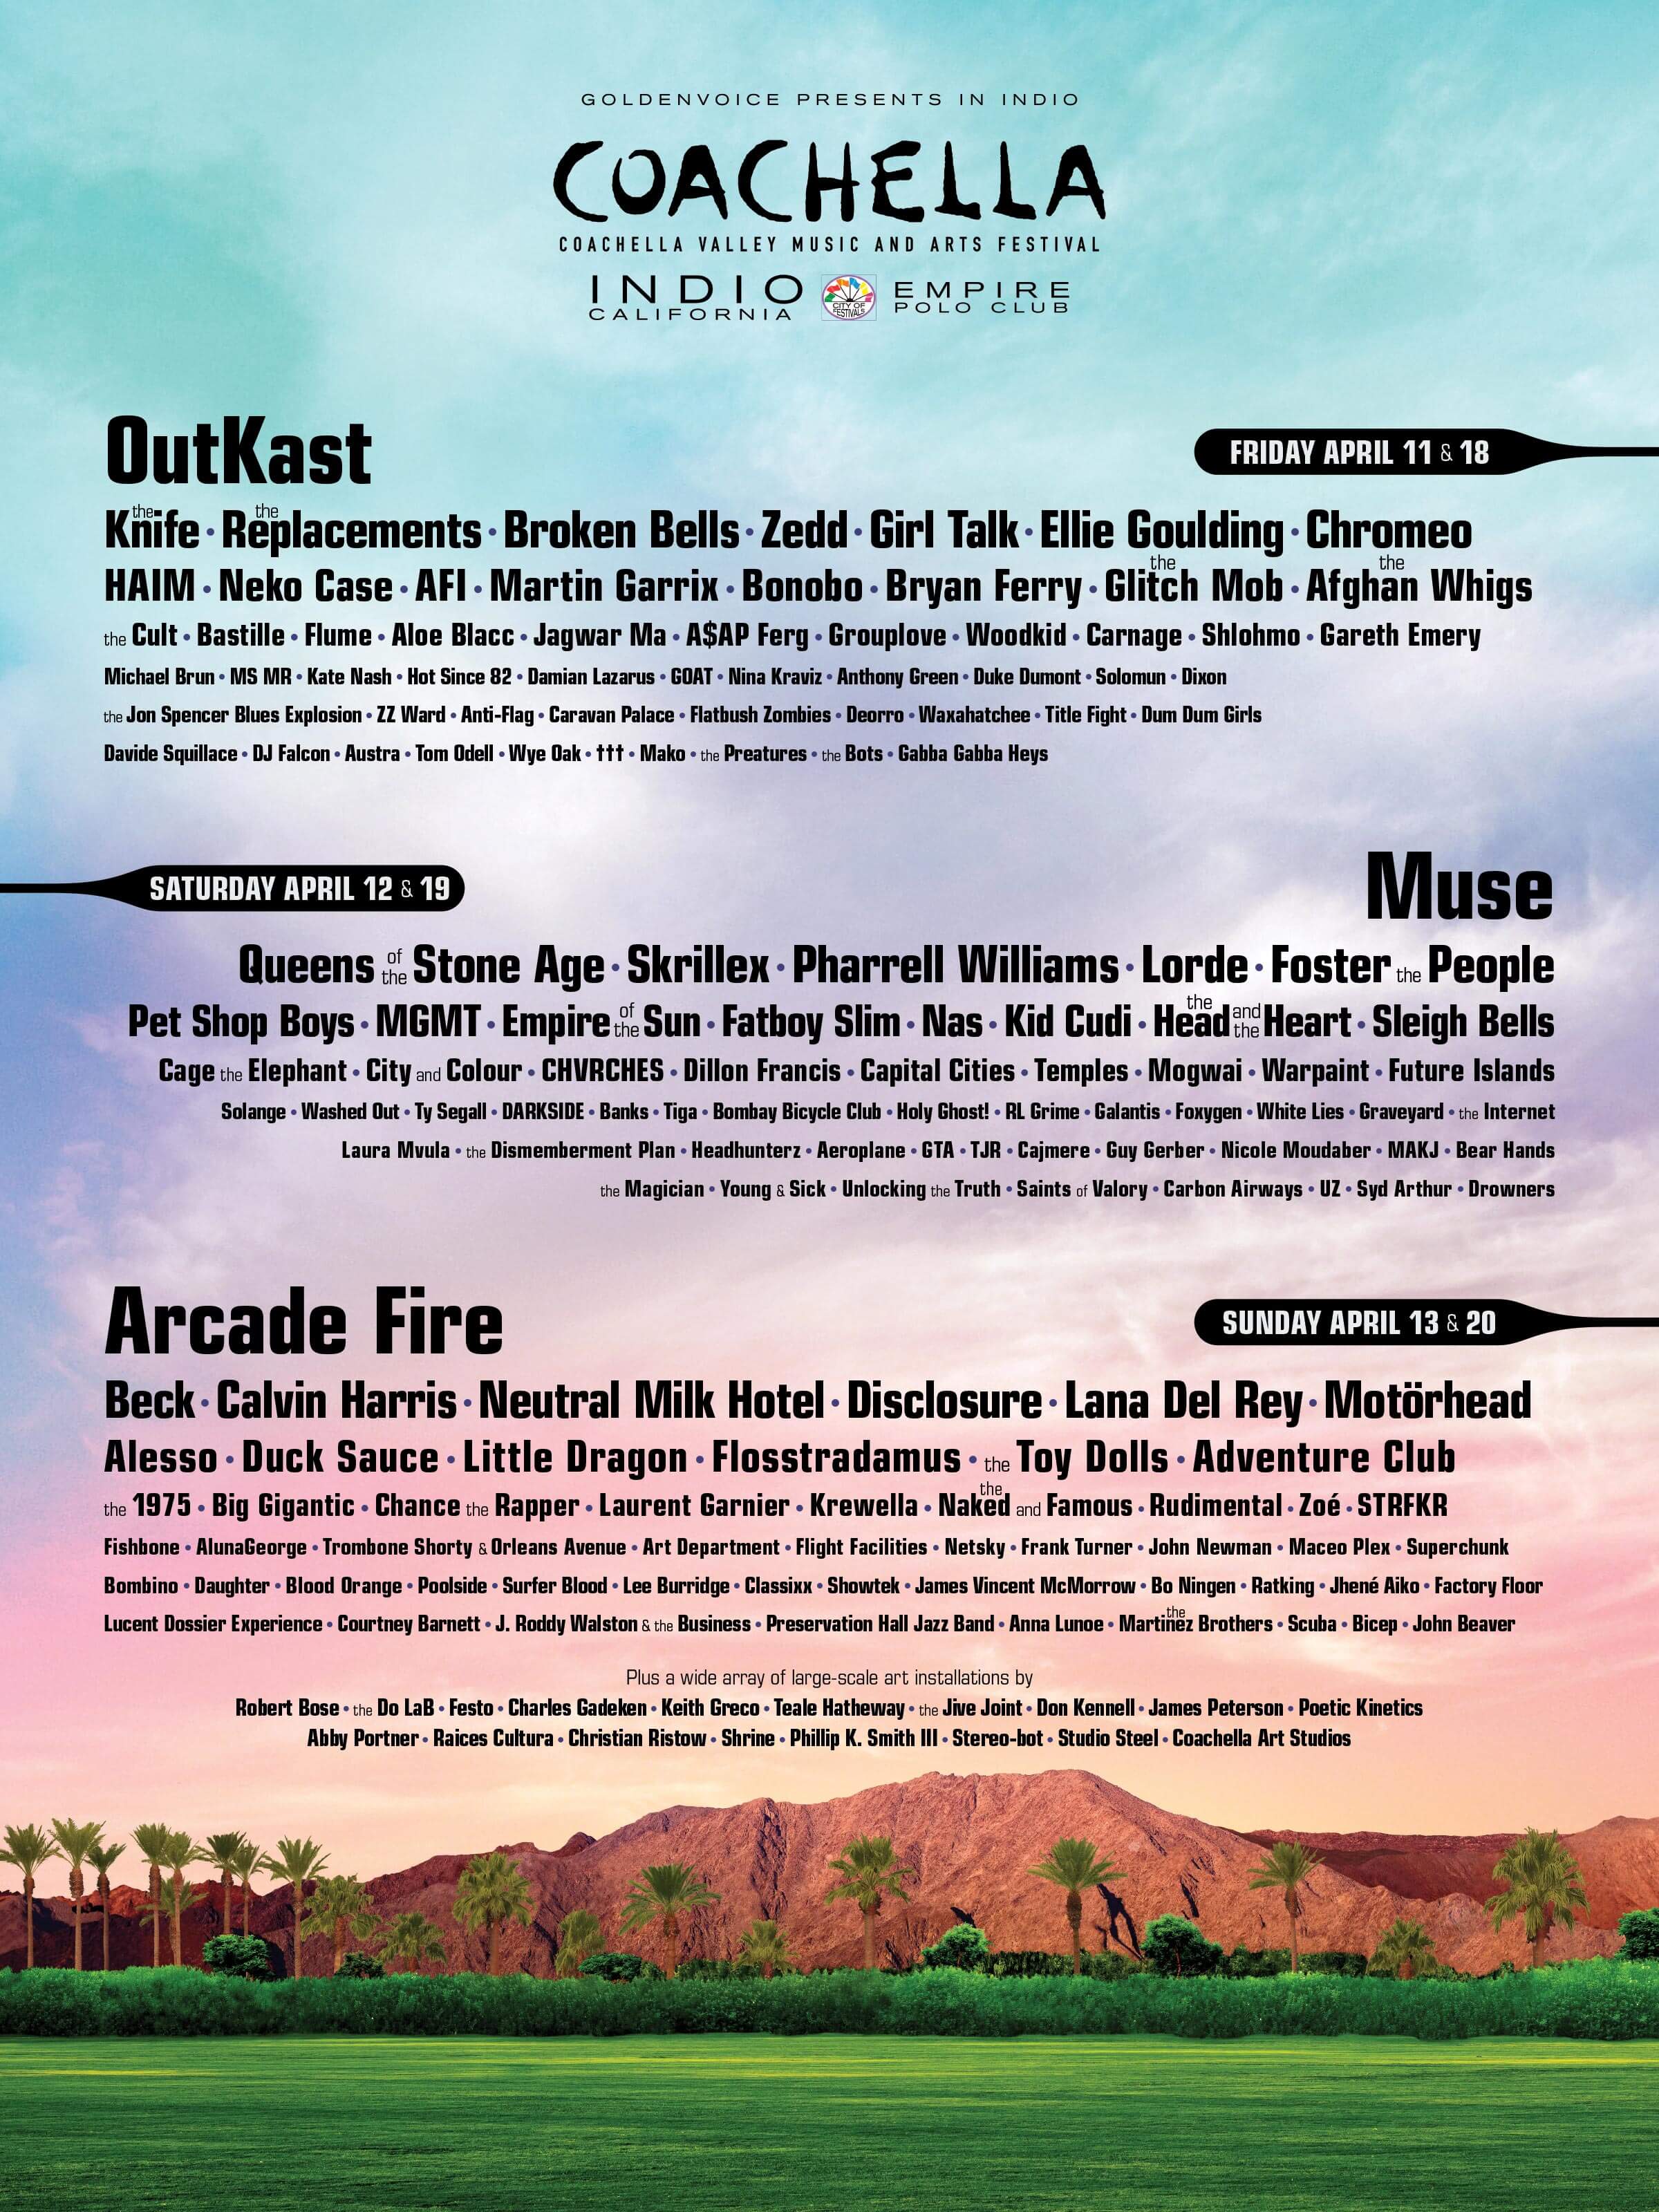 Coachella 2014 Lineup Poster